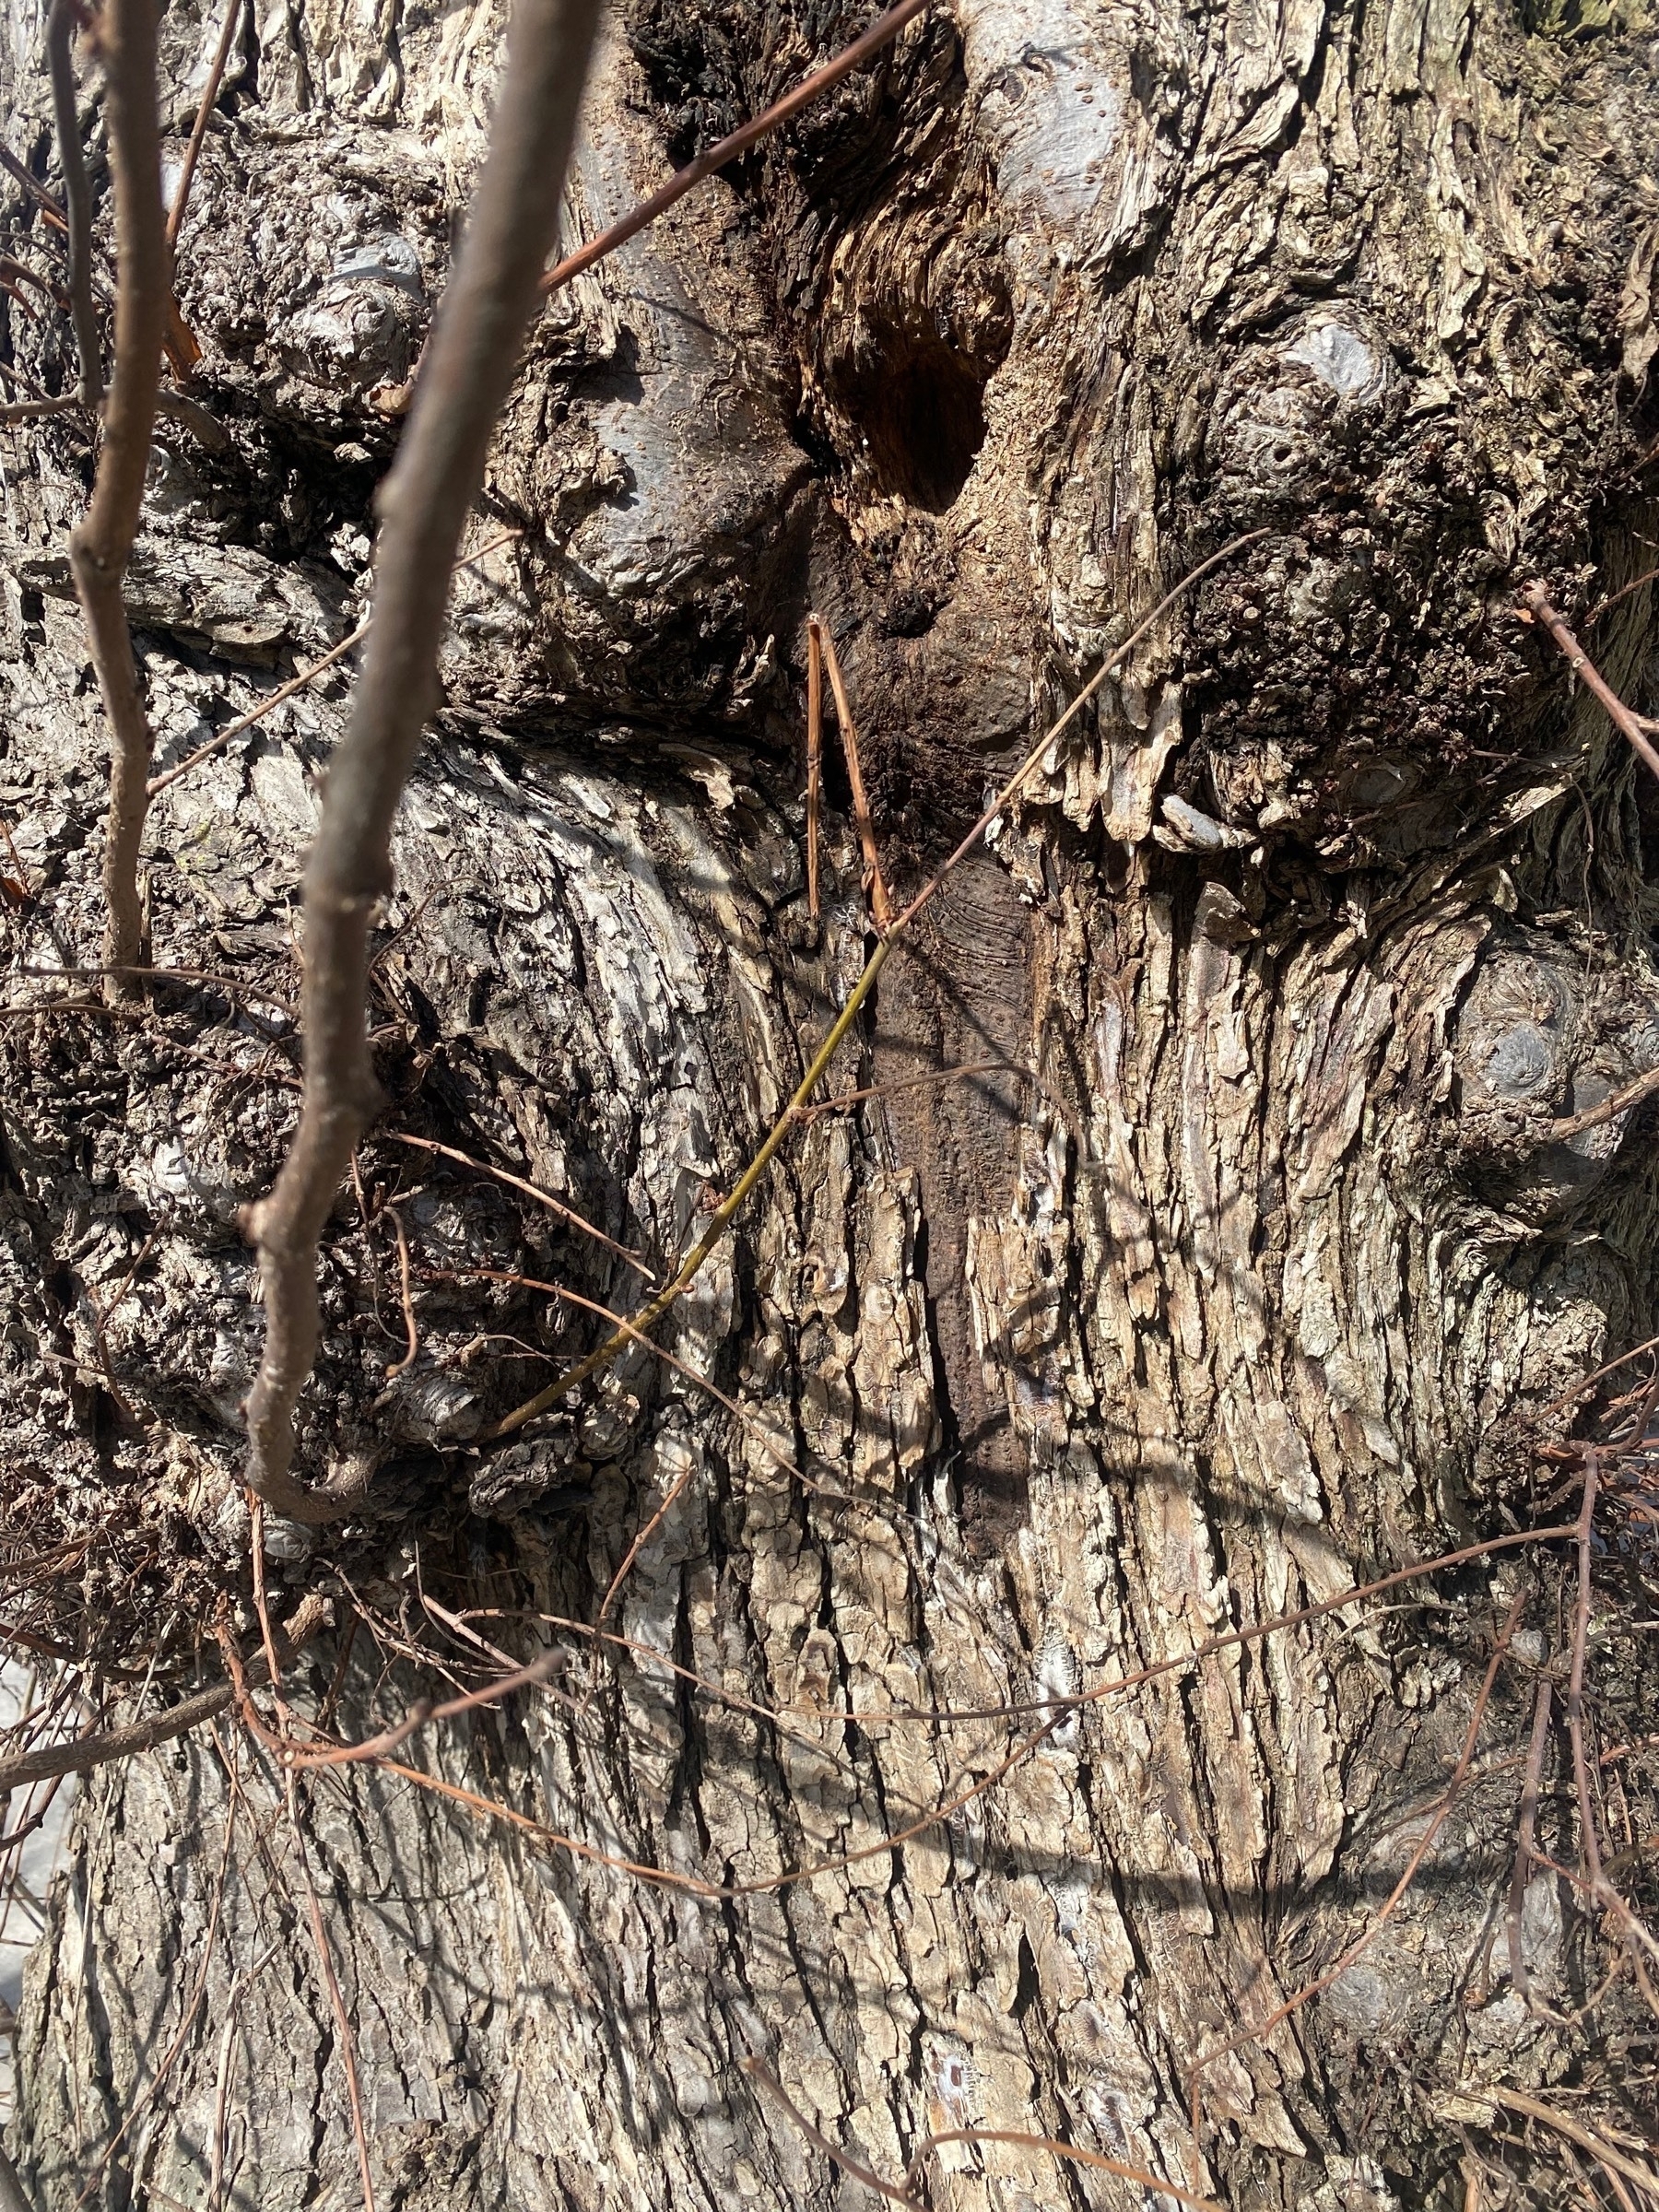 Close up of tree bark with knobby boles and twigs.